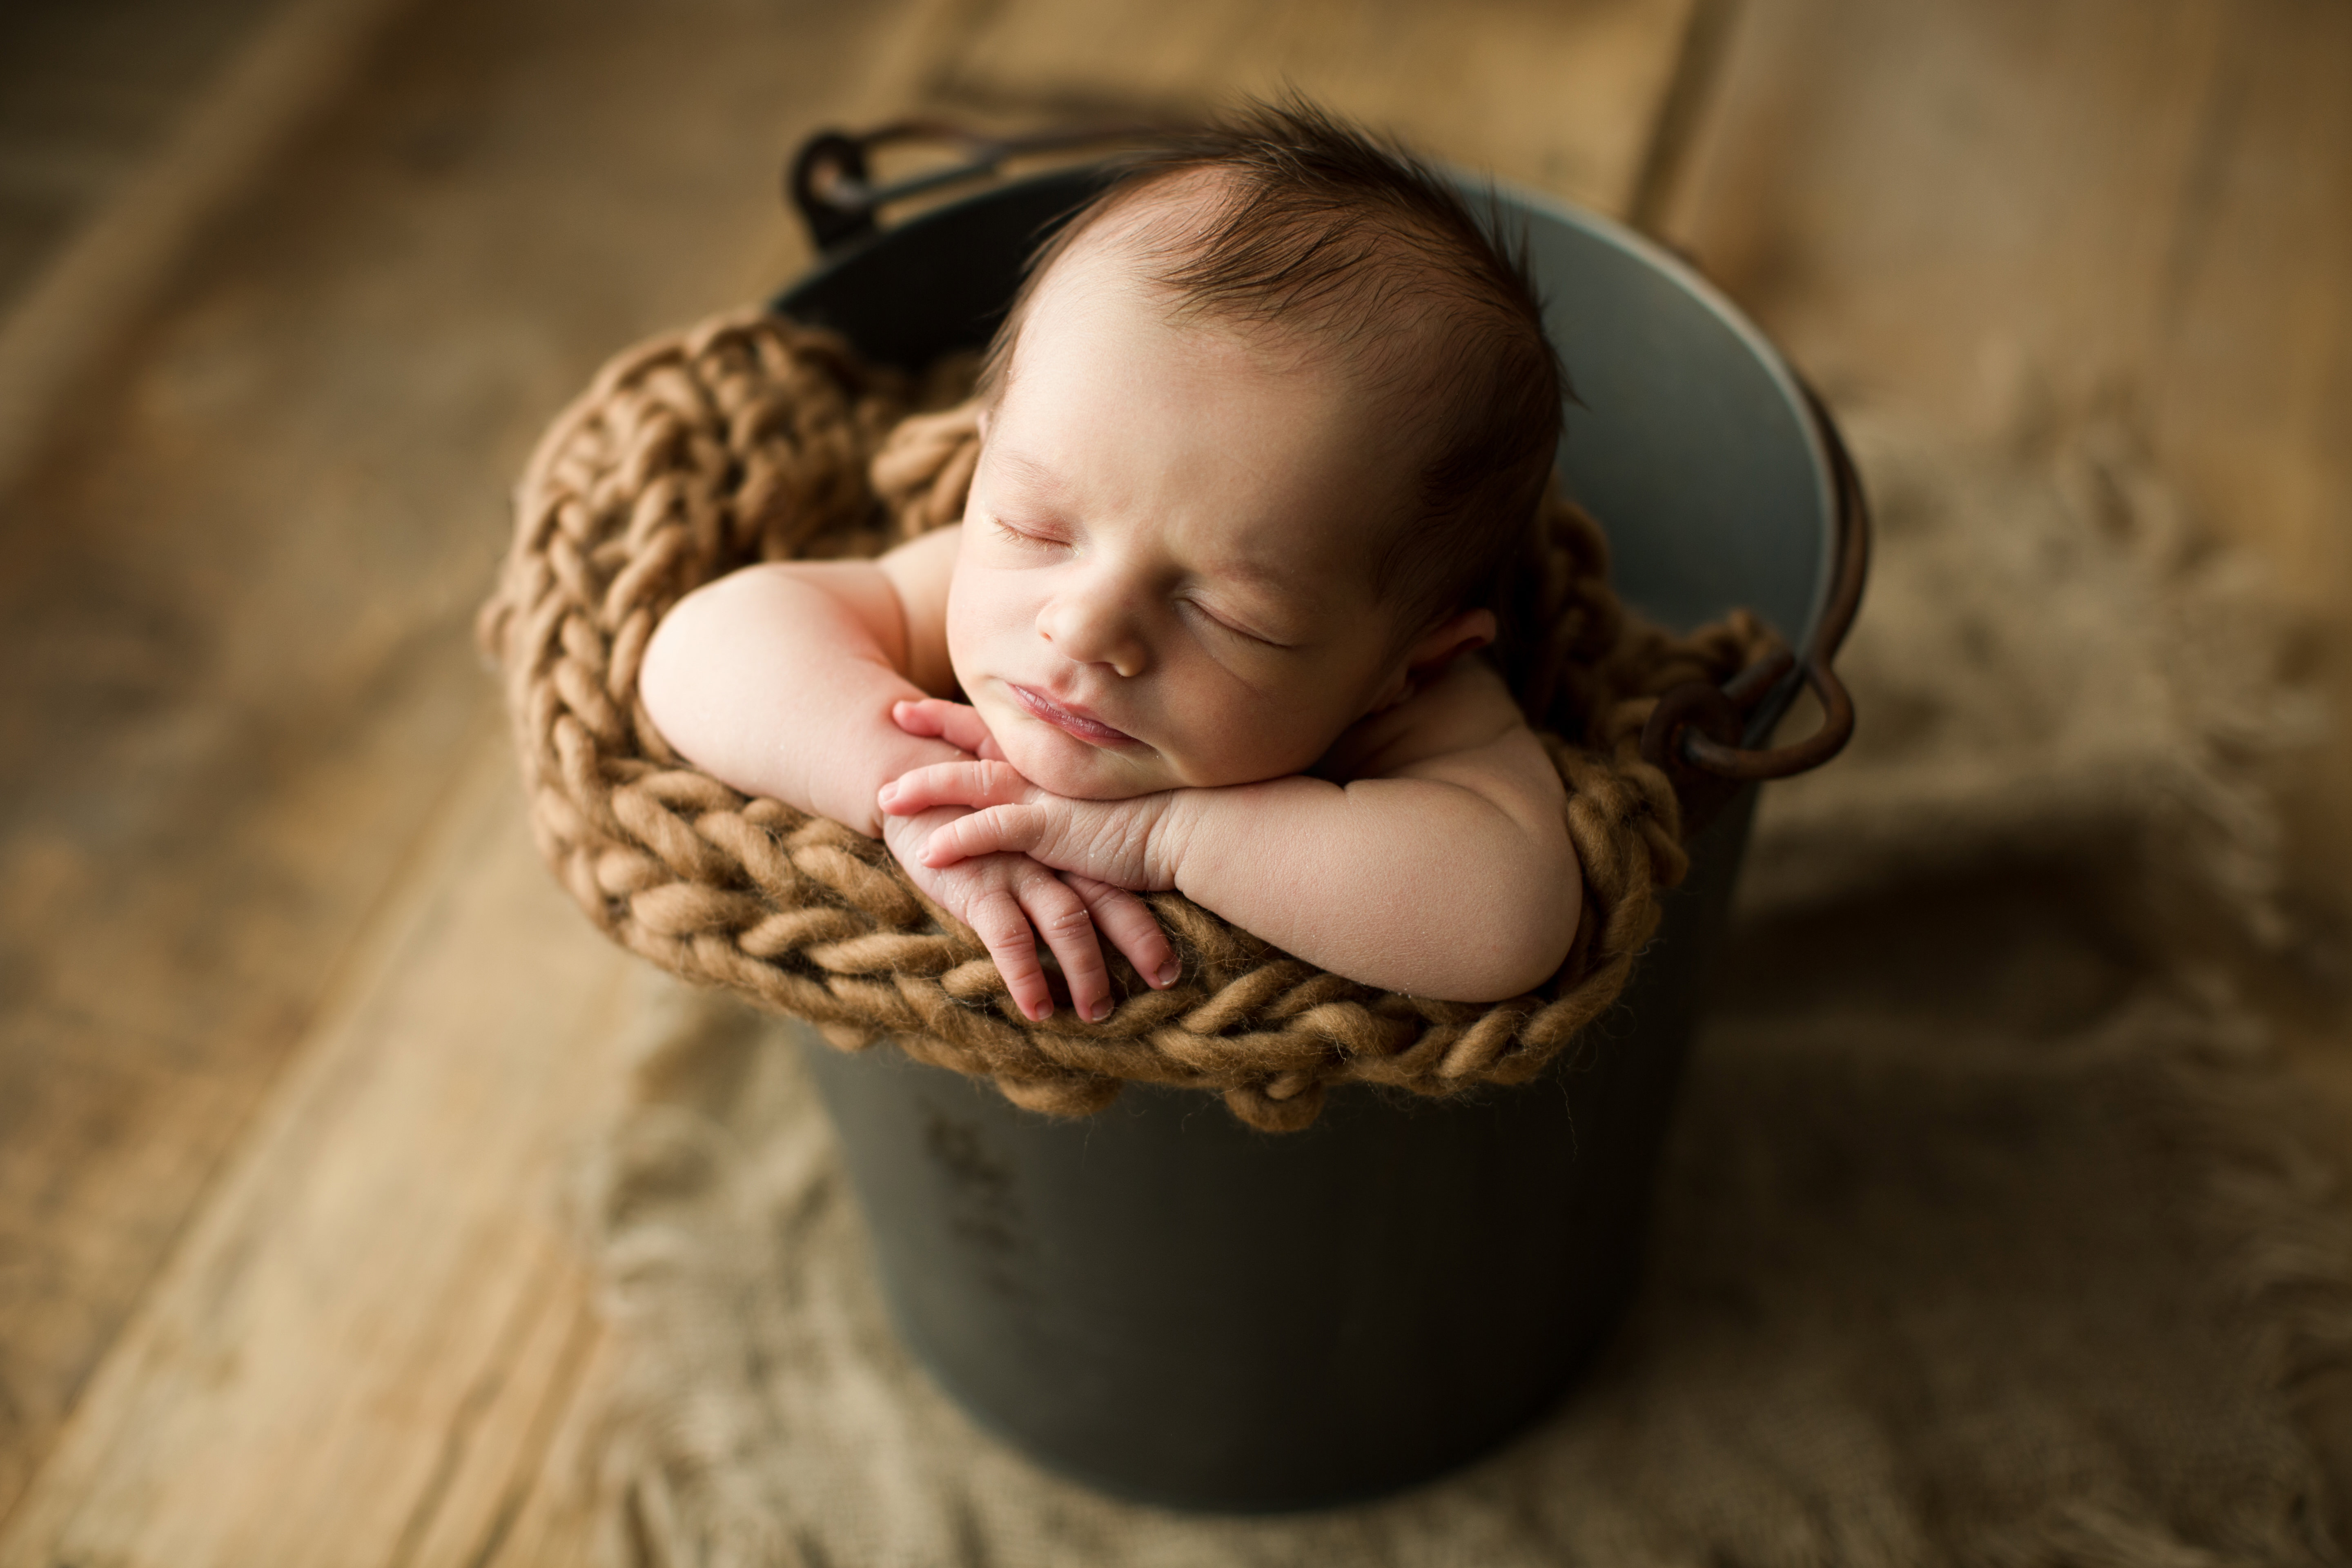 newborn baby boy in a bucket